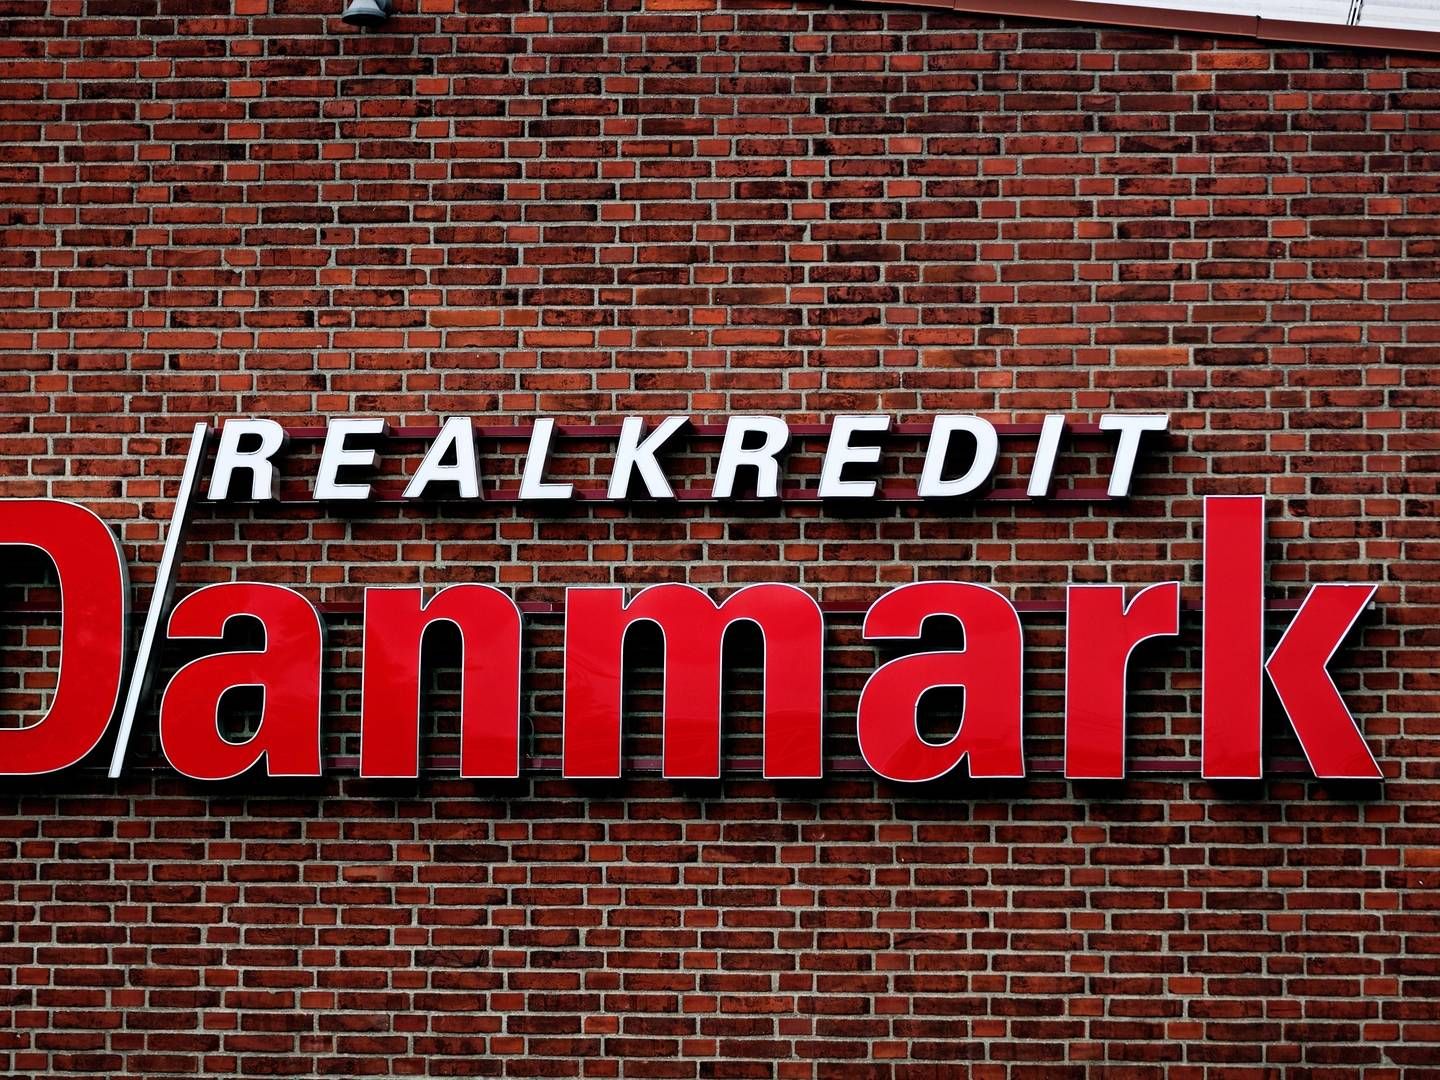 Realkredit Danmark oplever stor interesse for lån med kort rentebinding. | Foto: Realkredit Danmark/PR